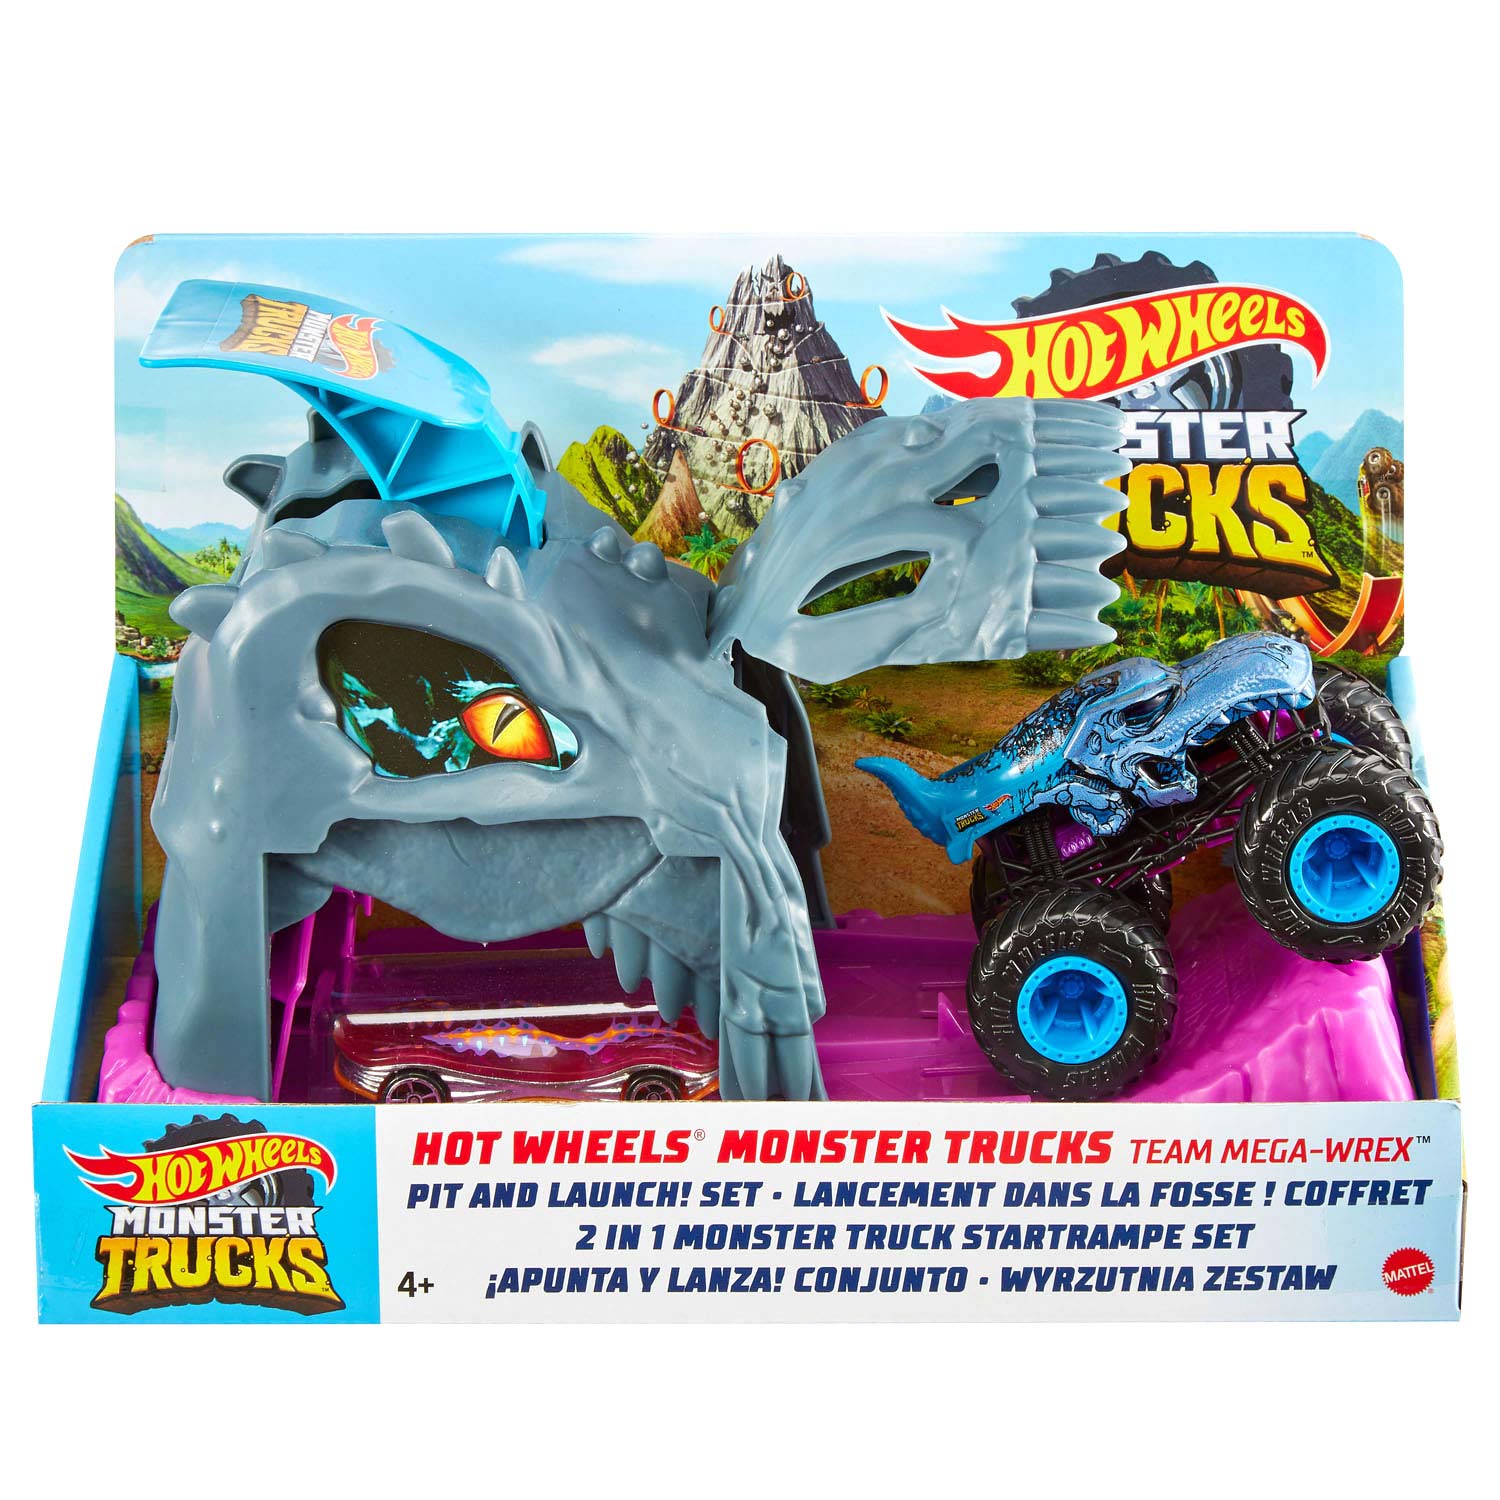 MEGA Hot Wheels Mega-Wrex Monster Truck Building Set with 1 Figure